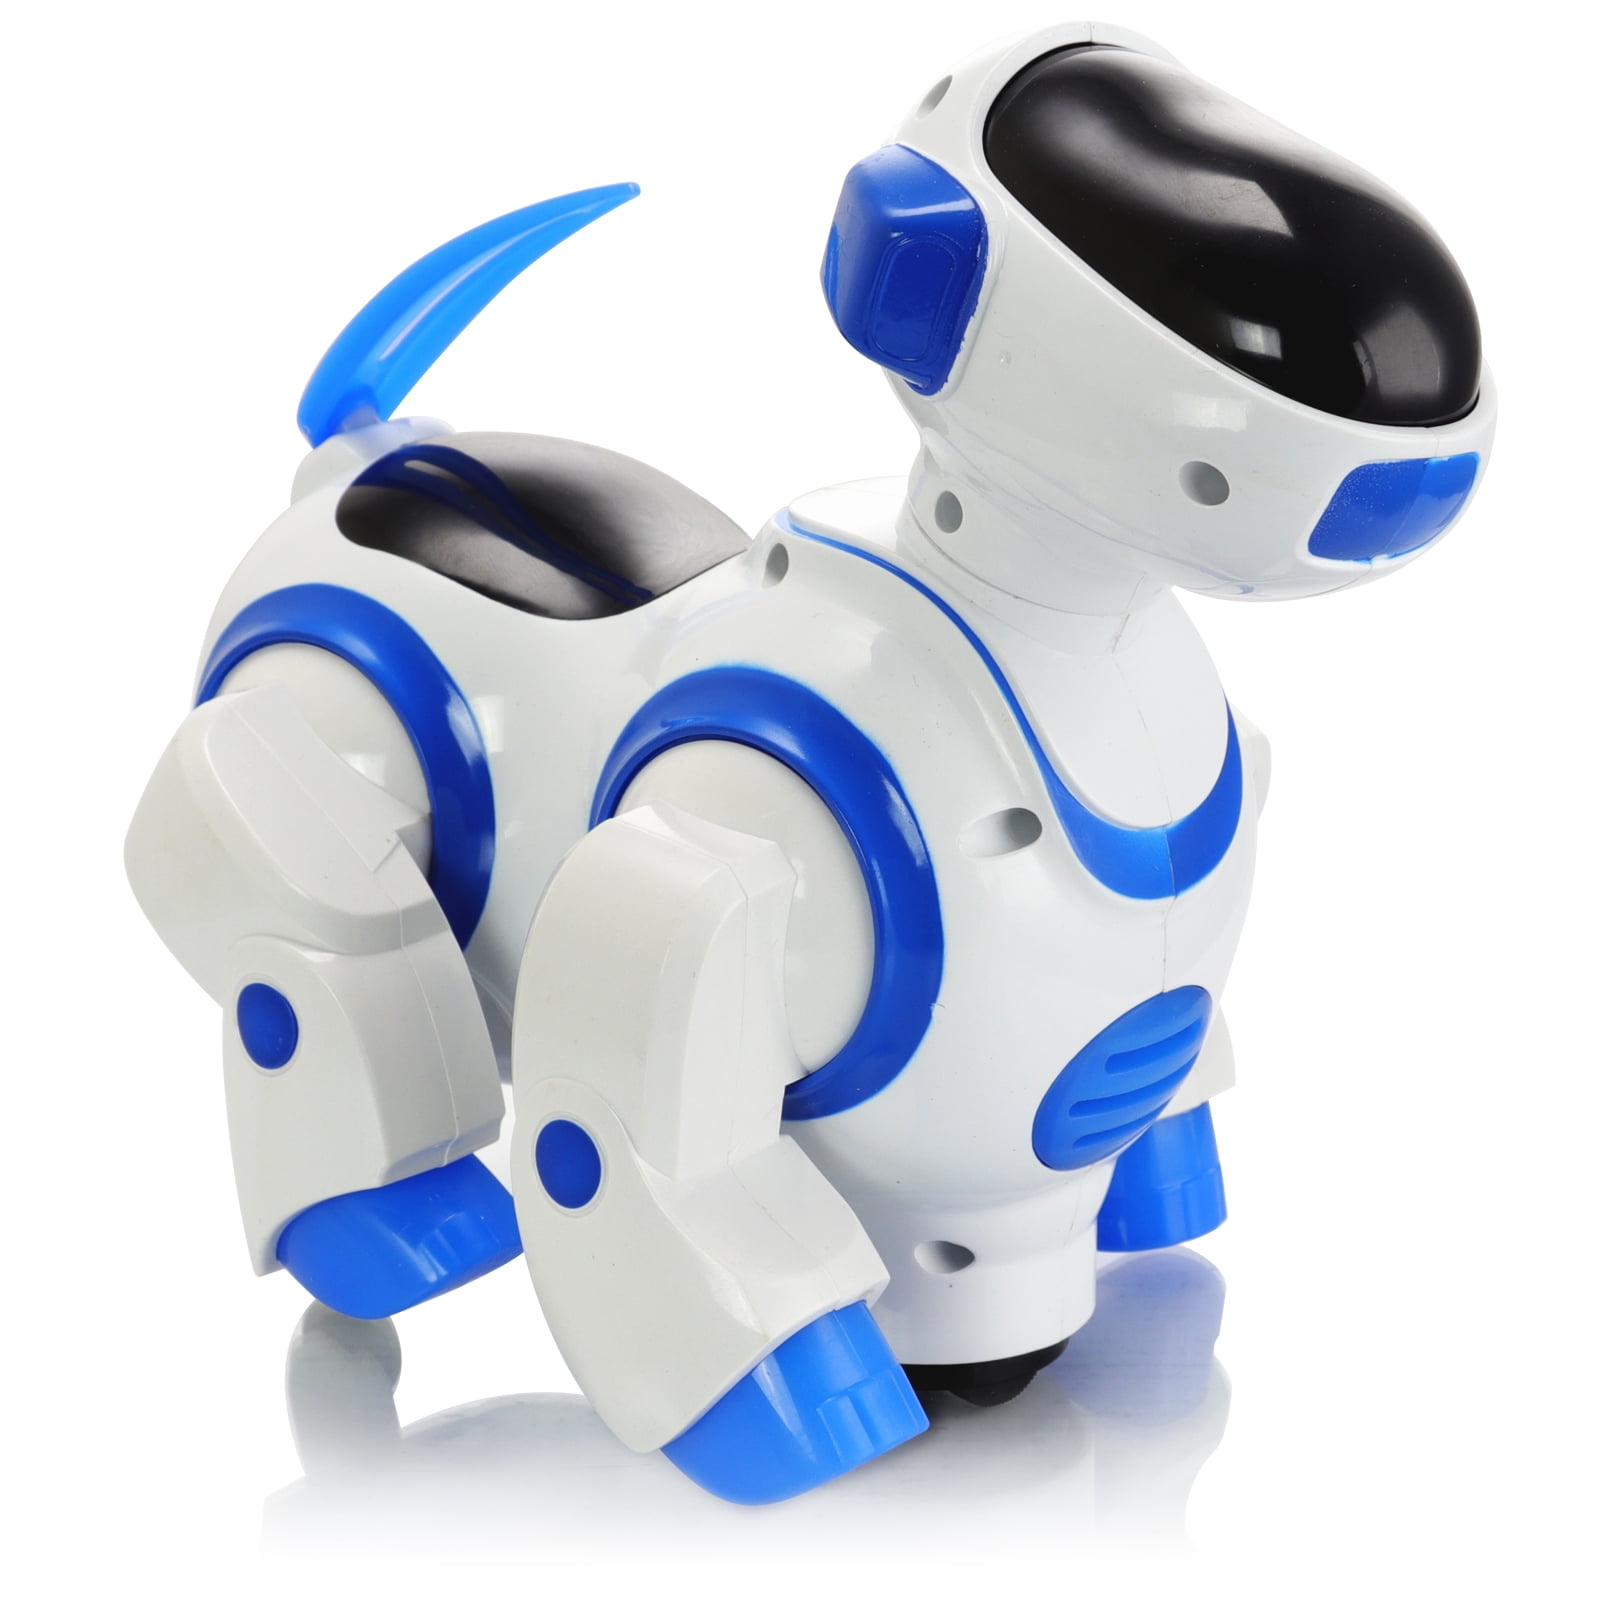 Vivitar Robo Dancing Robot Dog VA90024 Steam Science Technology for sale online 